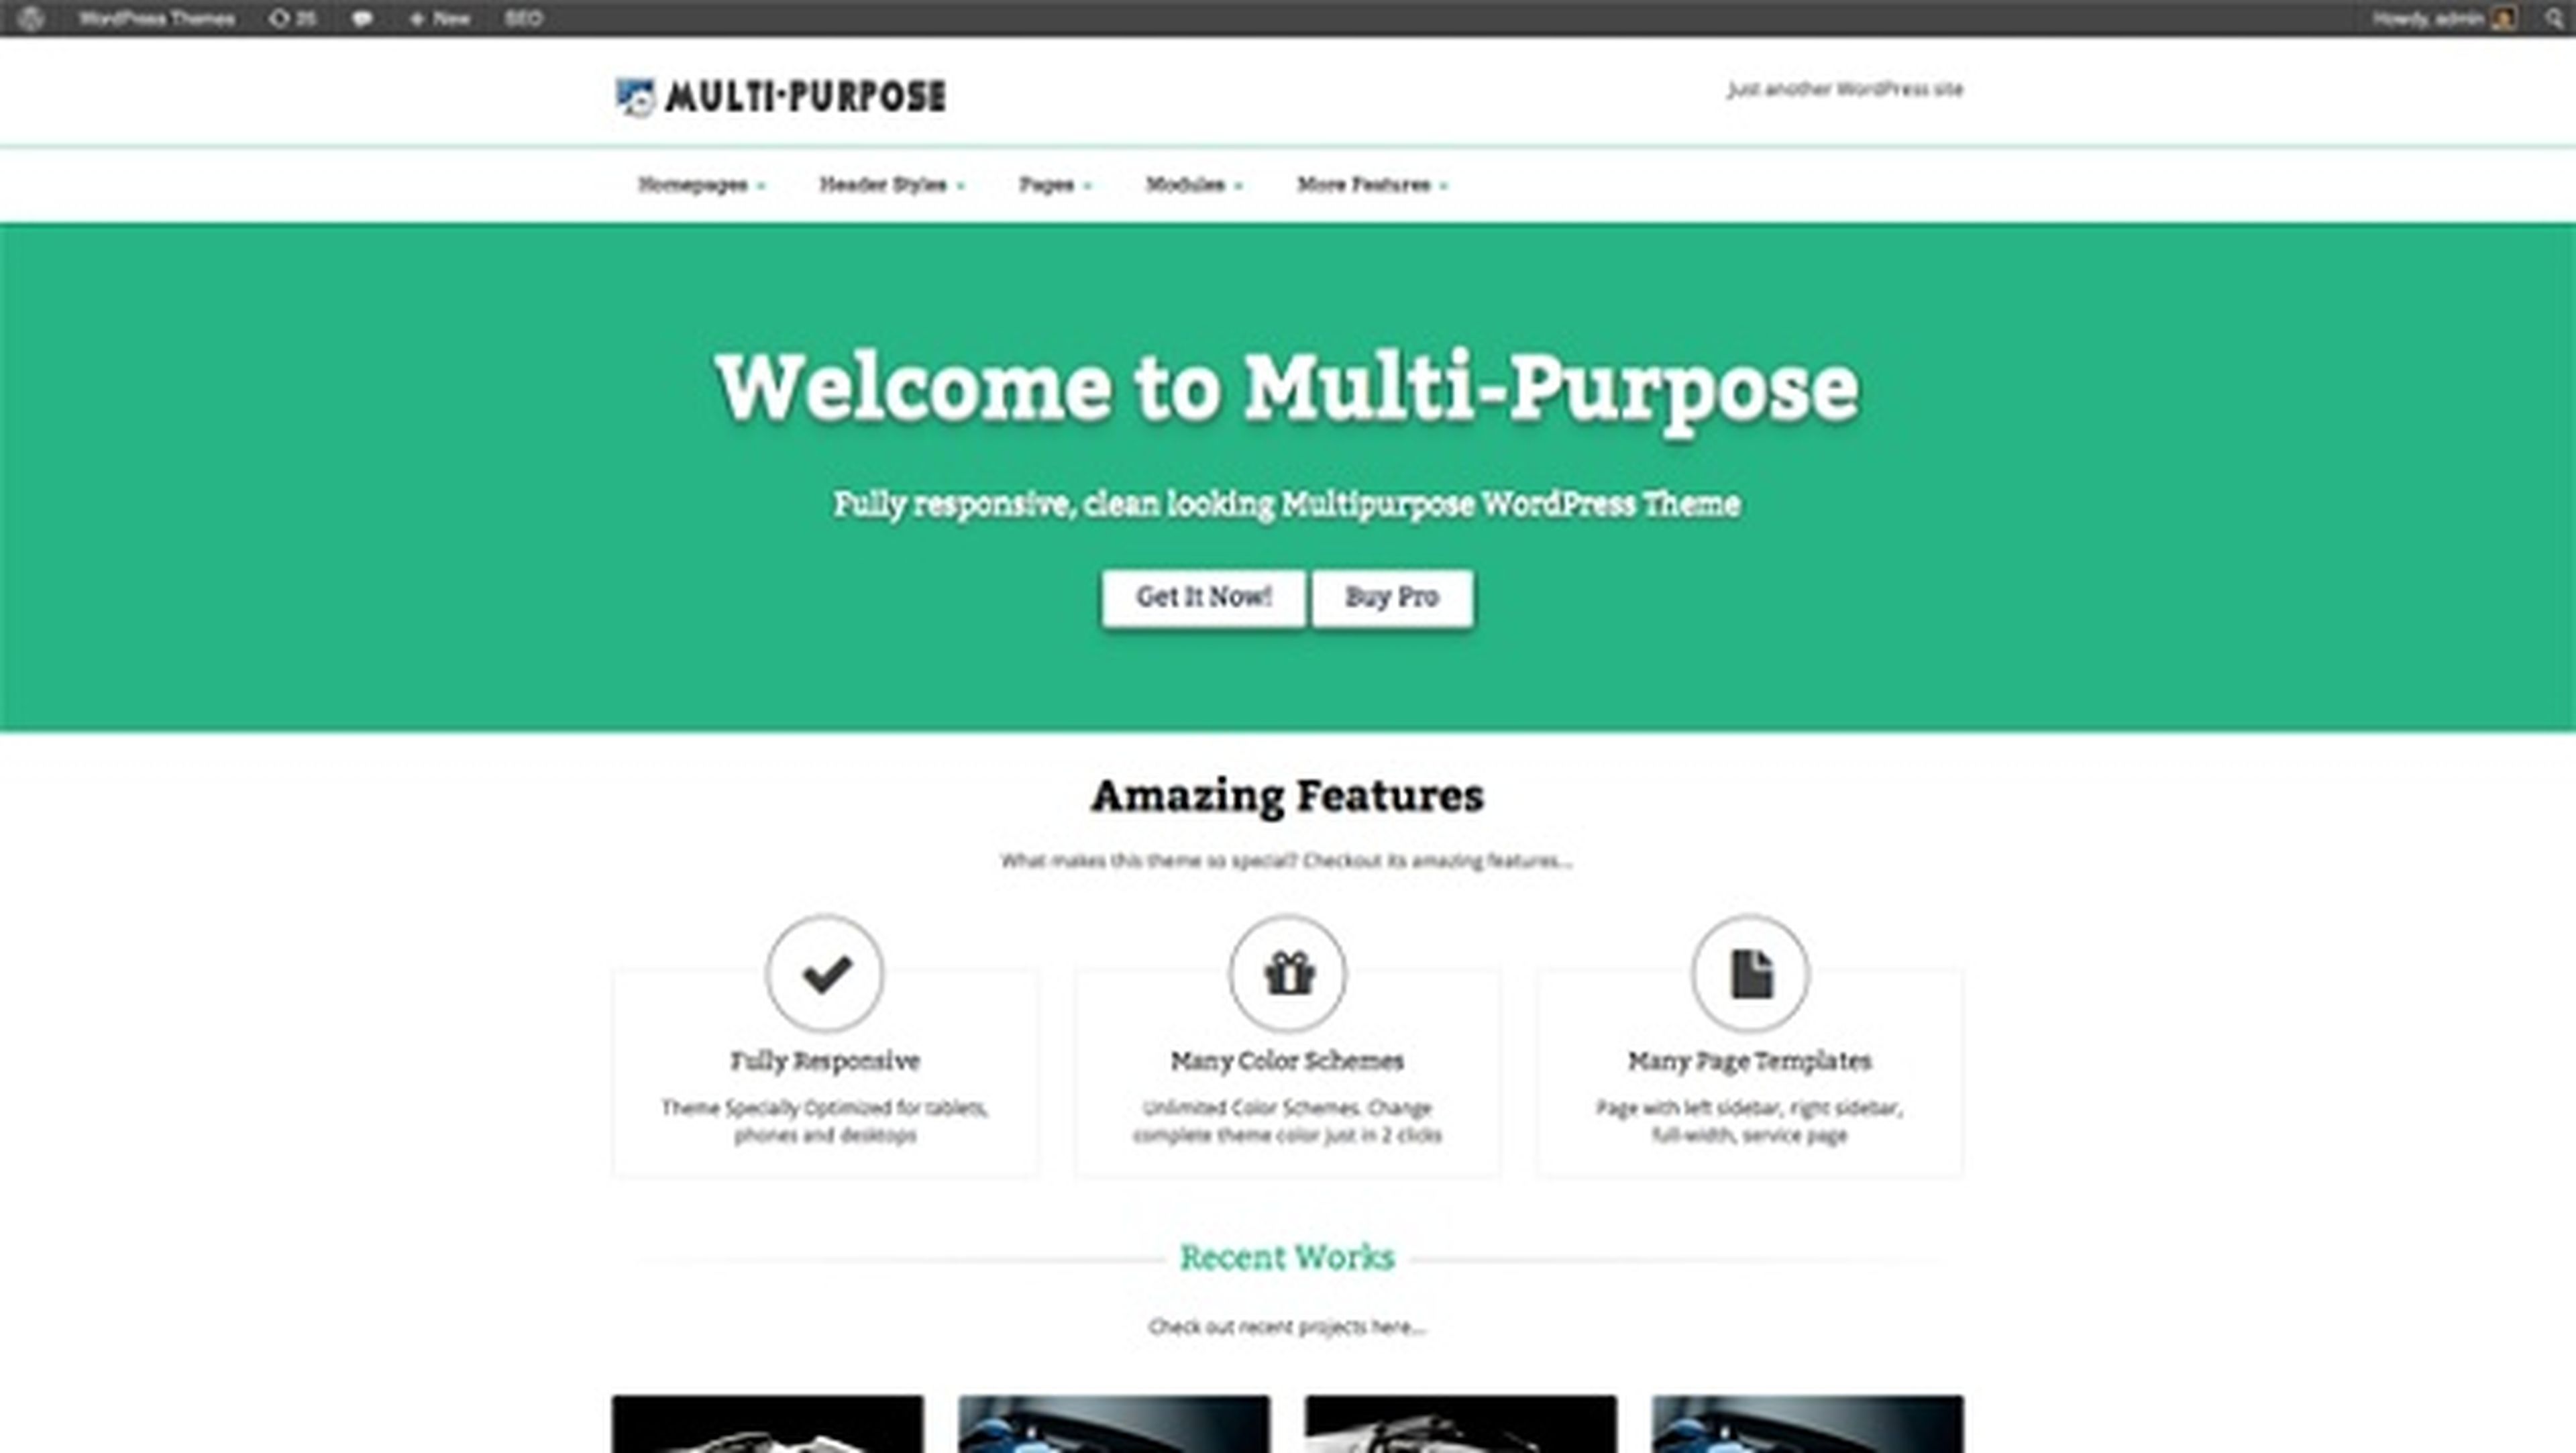 Multipurpose, tema gratuito para WordPress